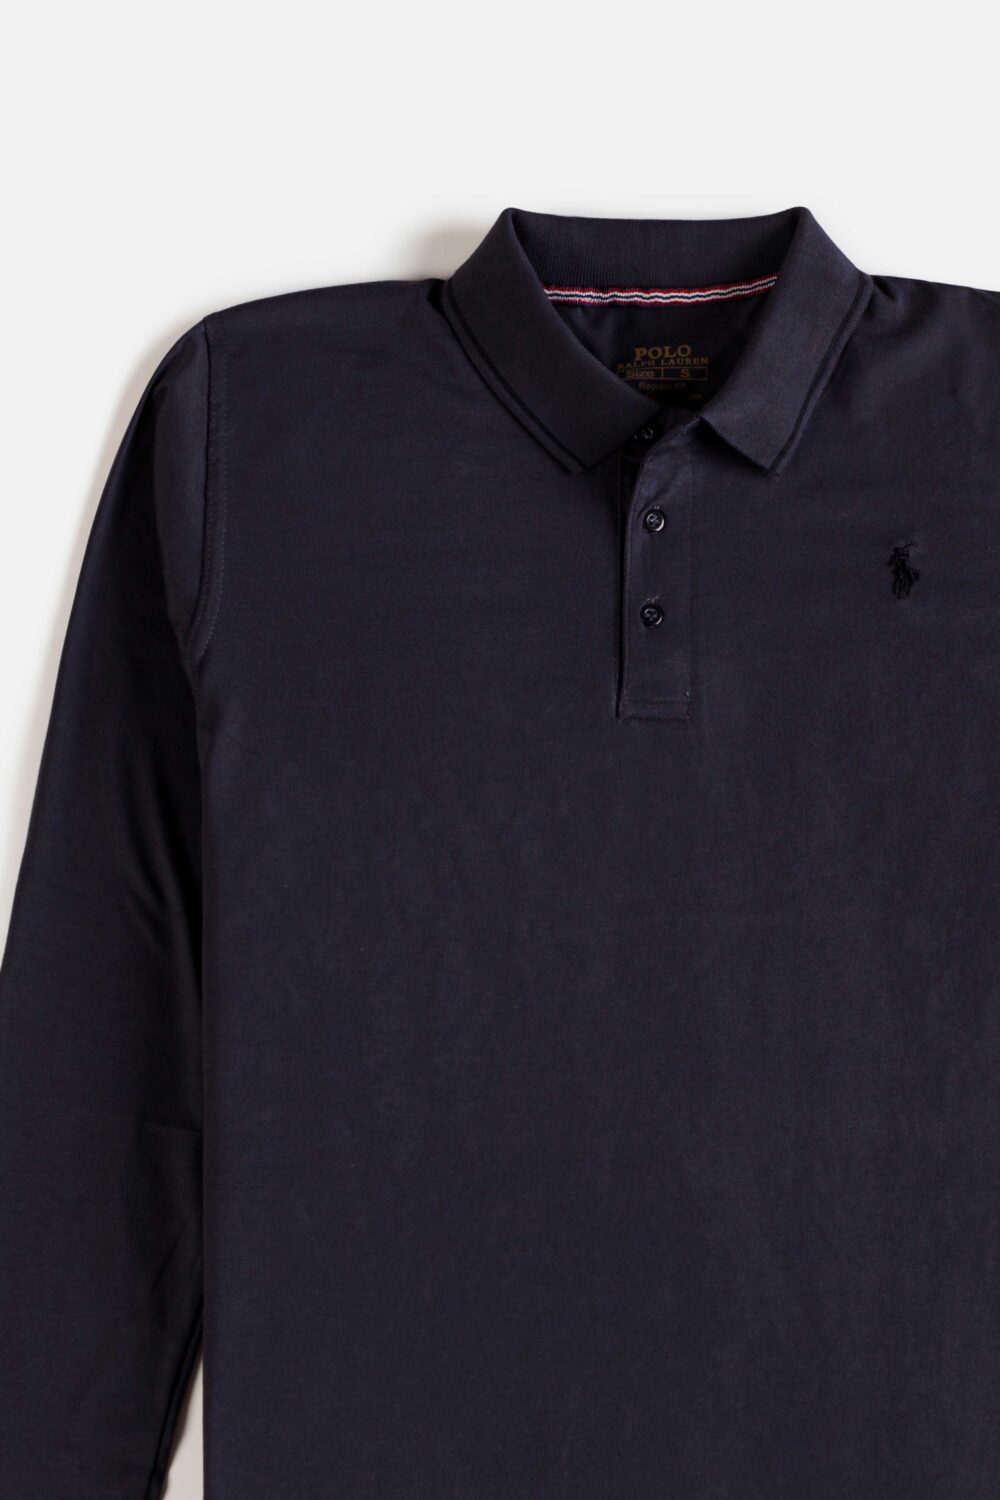 RL Premium Cotton Full Polo – Mettalic Black